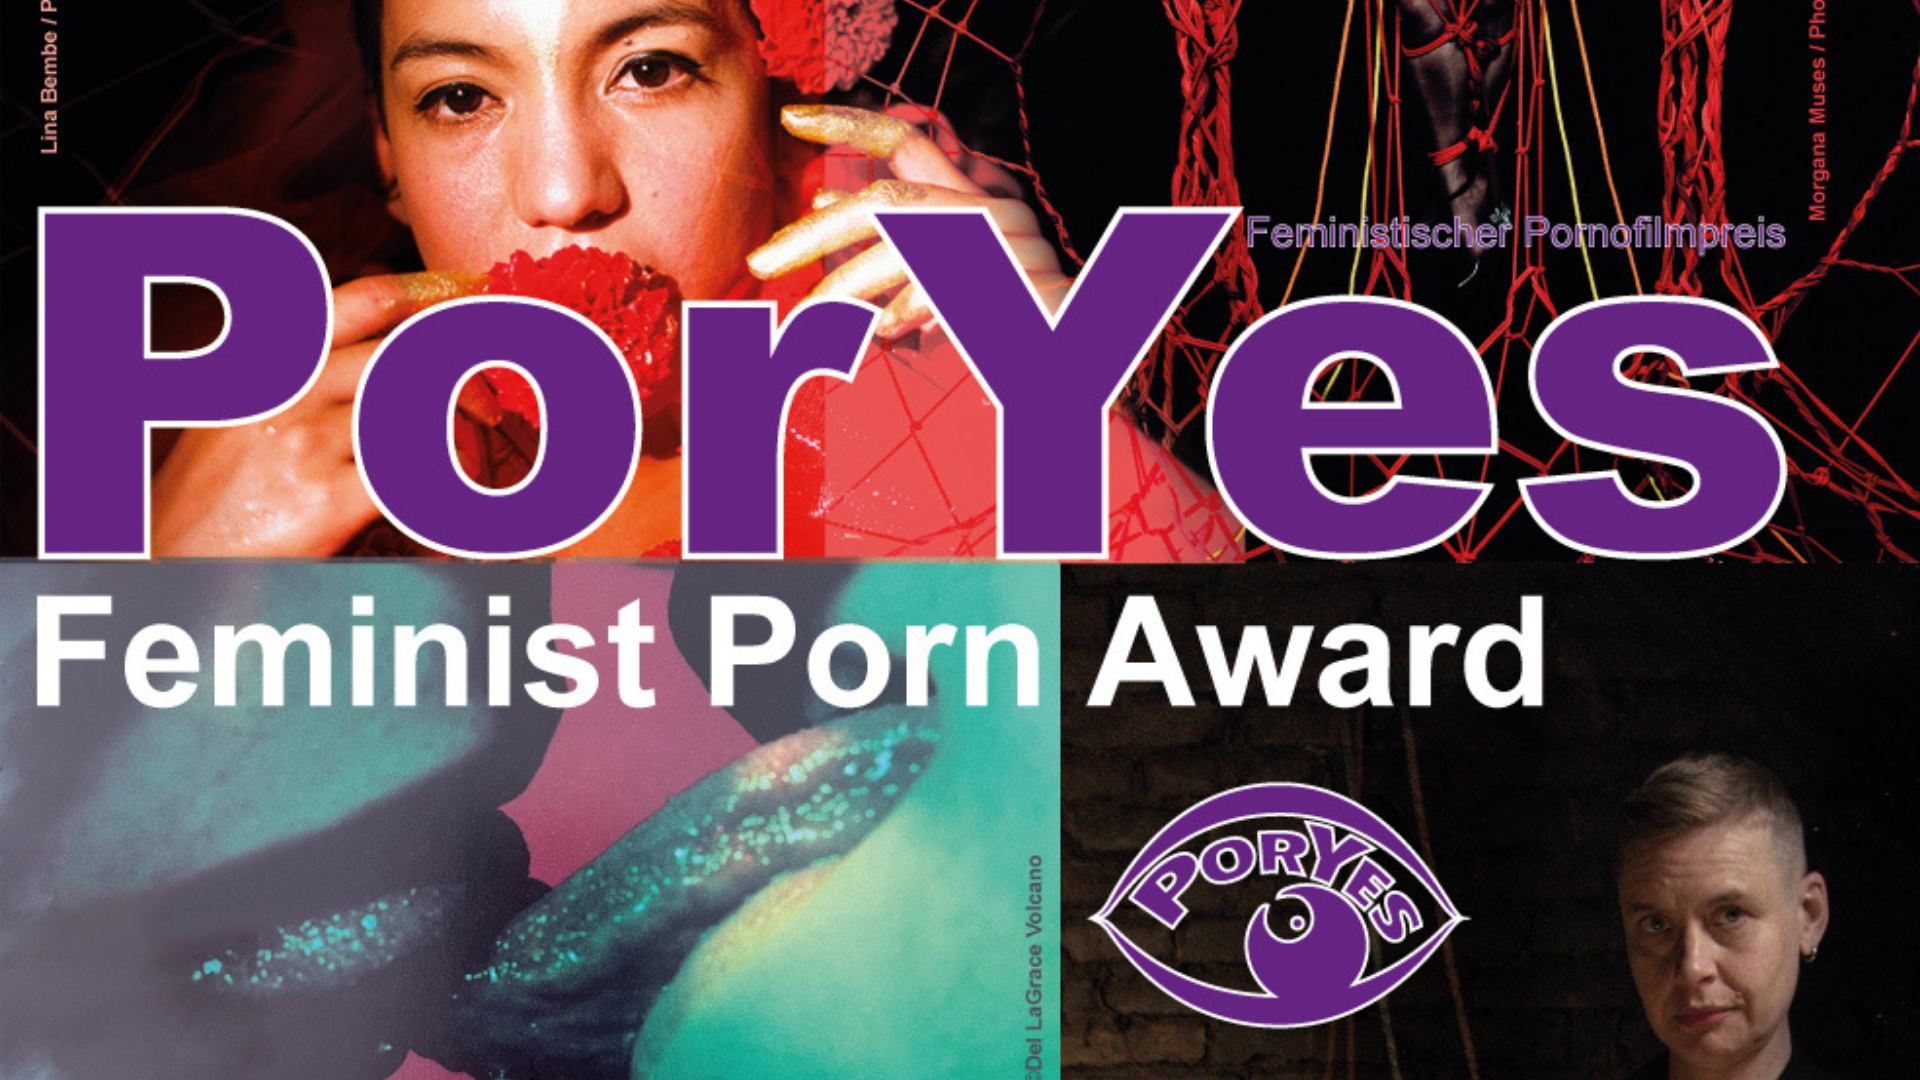 PorYes Feminist Porn Awards 2021